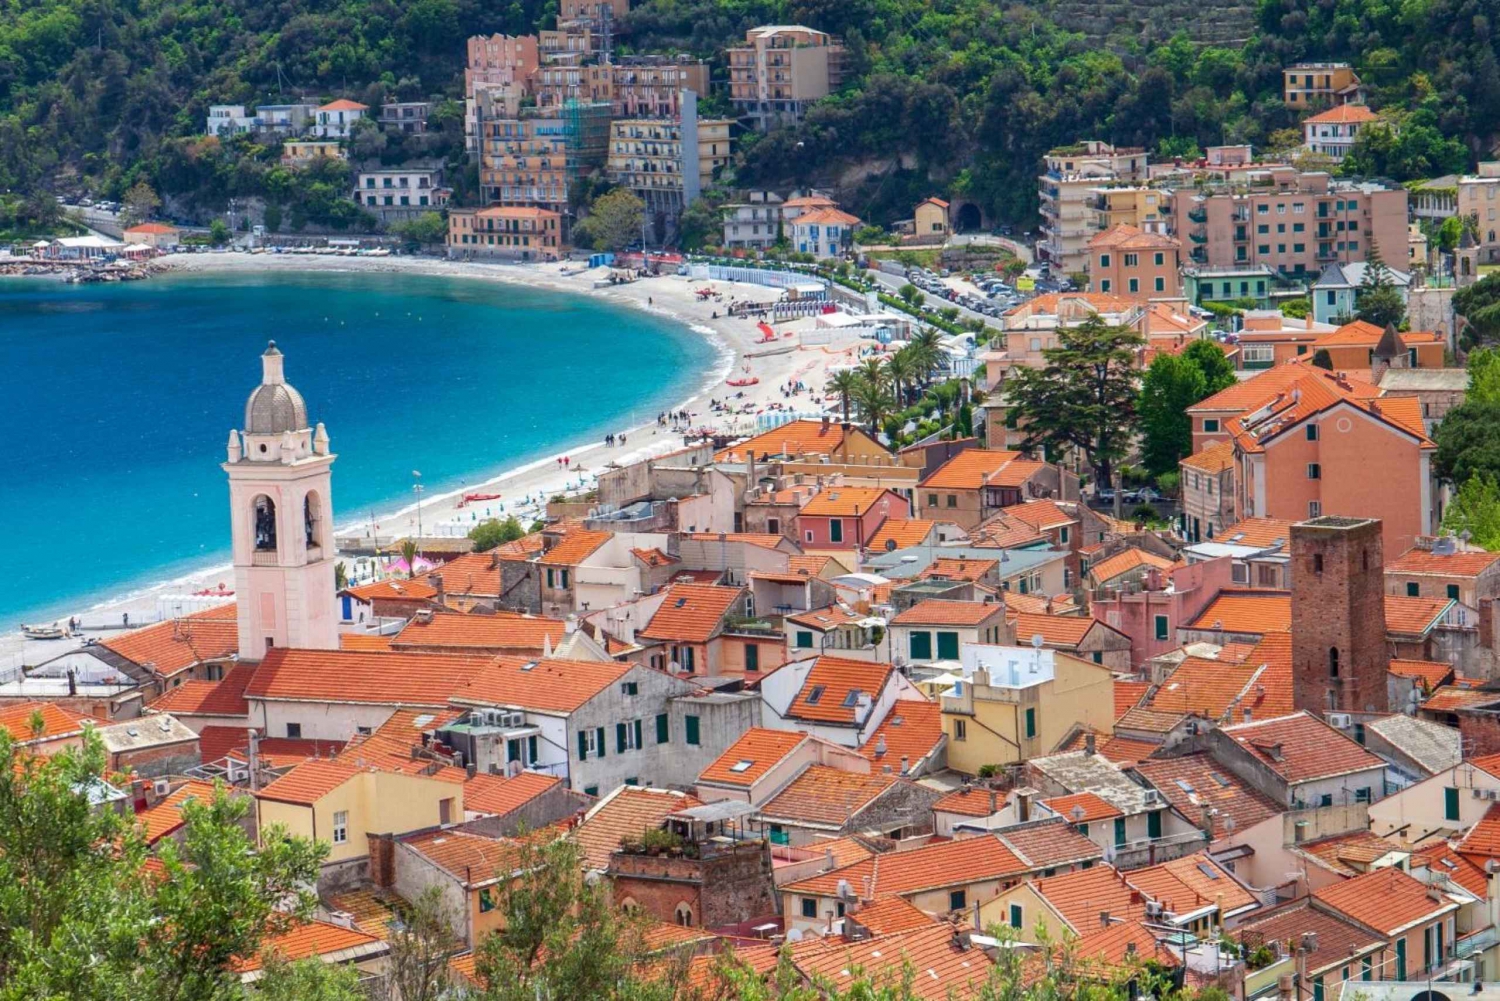 Beach day in Liguria - Experience the Italian summer!